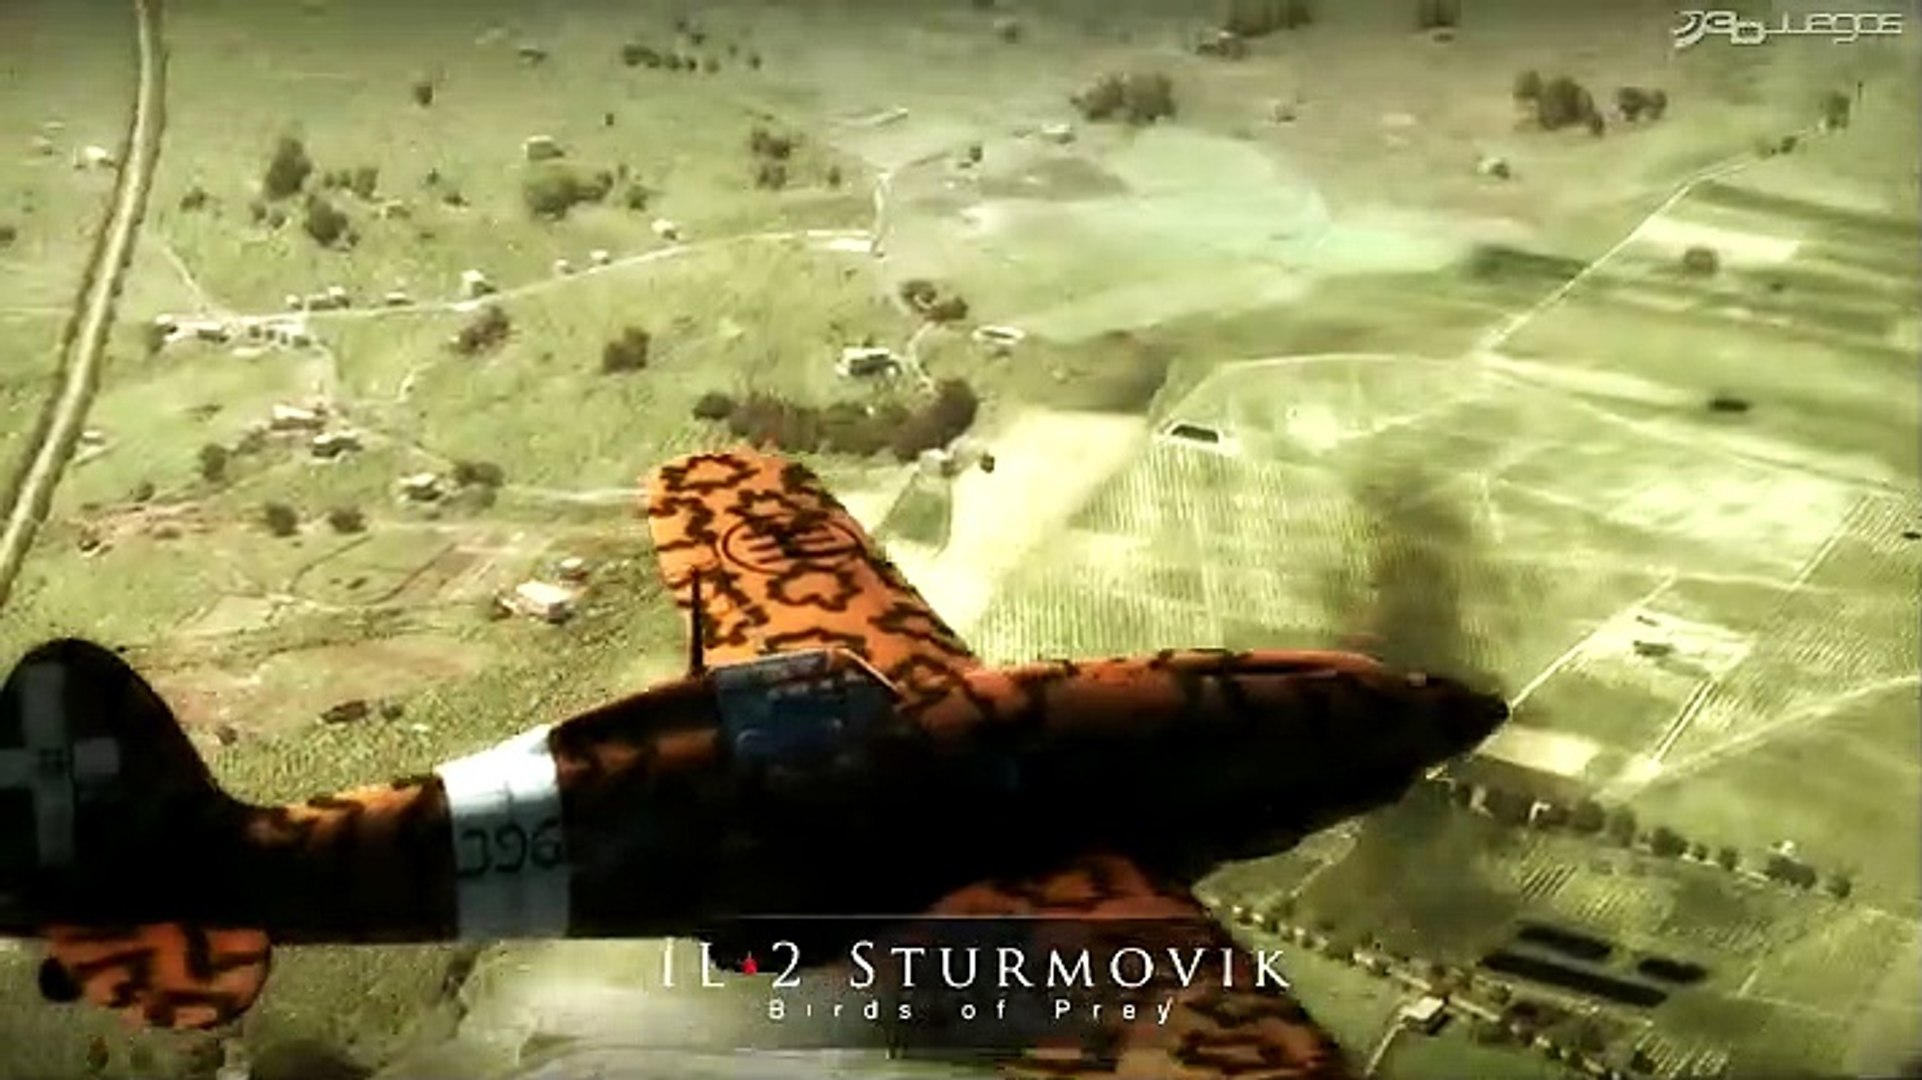 IL 2 Sturmovik - Birds of Prey: Vídeo oficial 4 - Vídeo Dailymotion